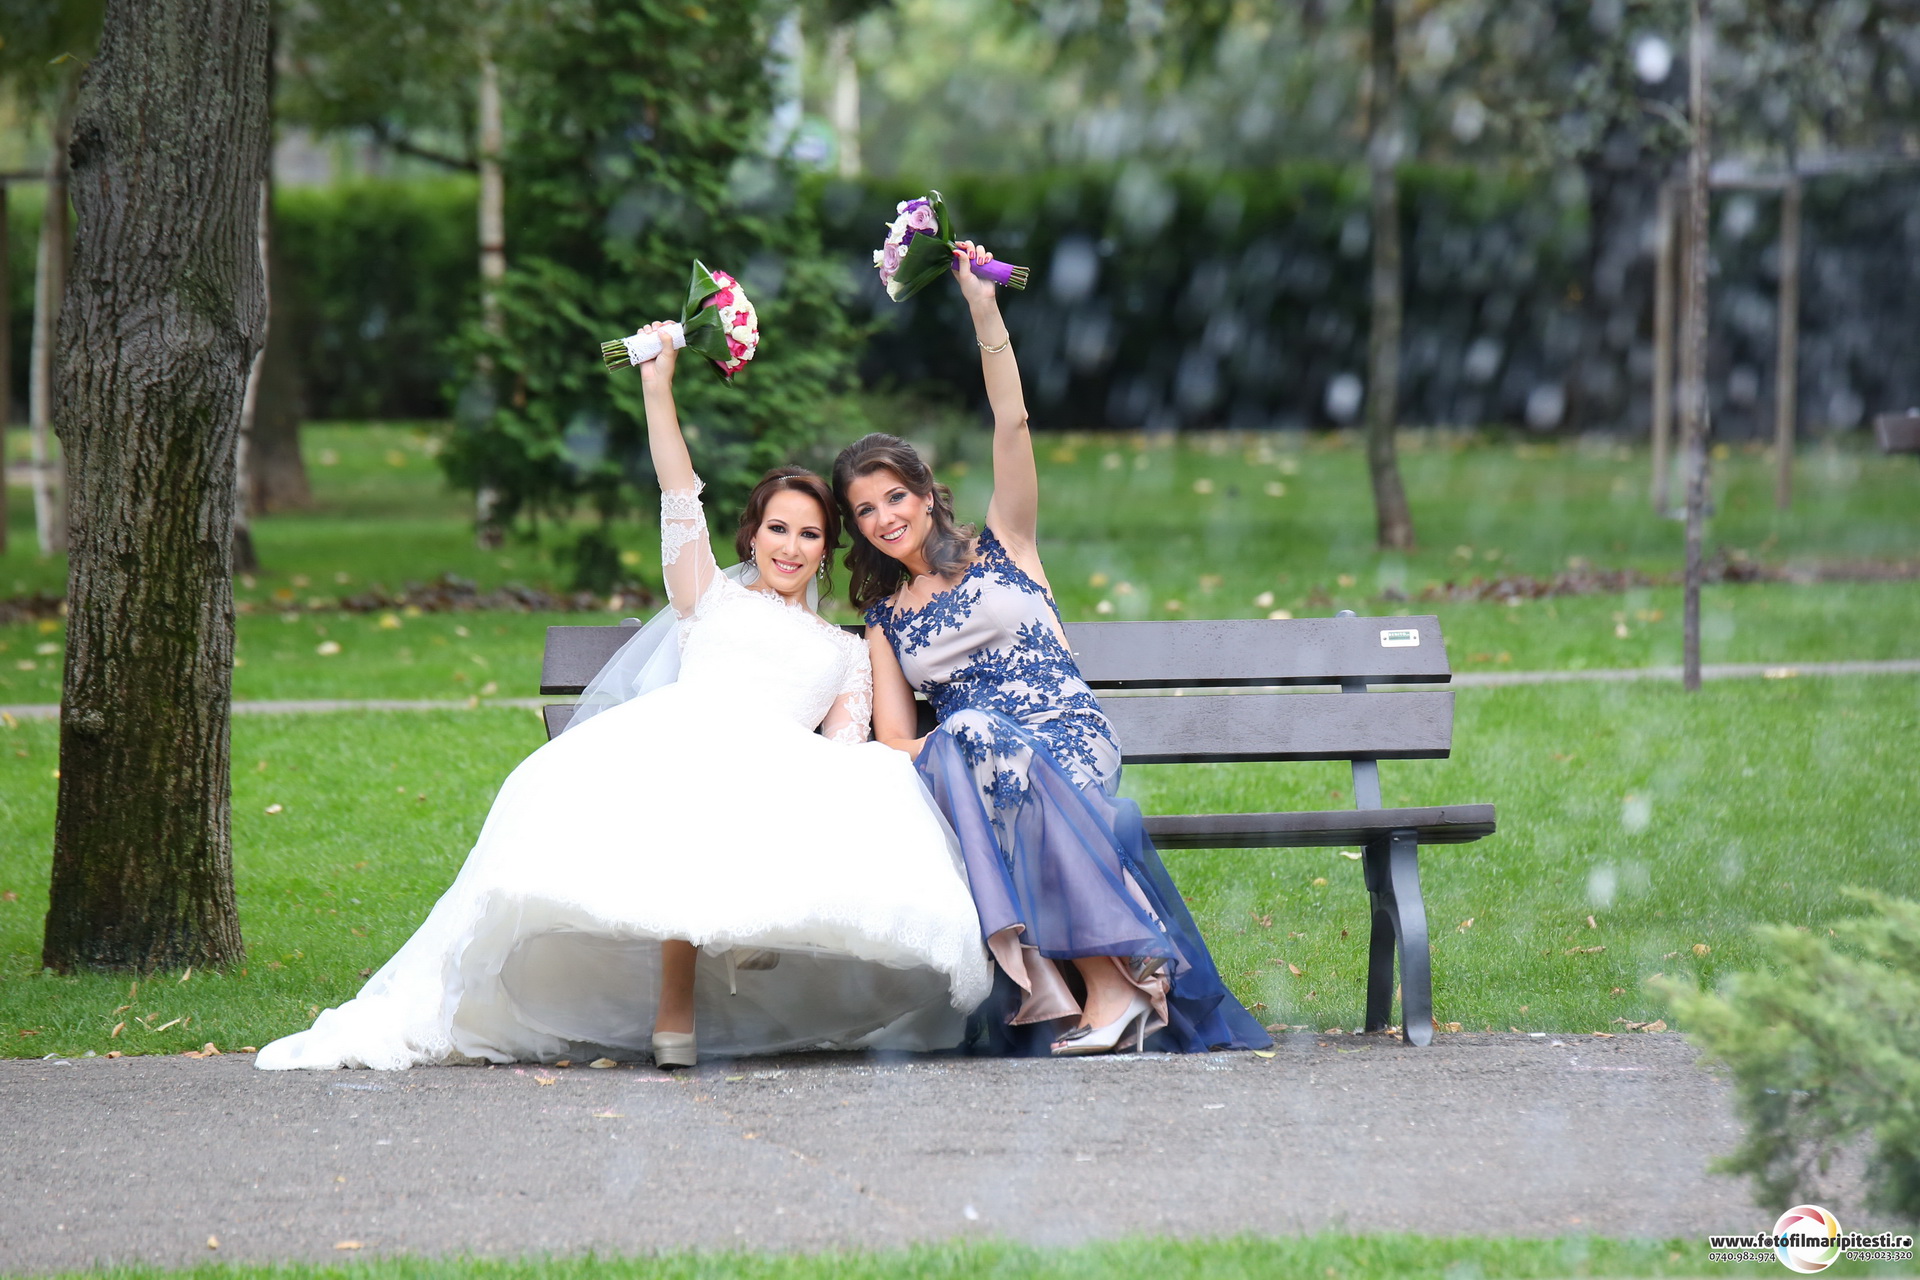 Fotografii de nunta ce vor starni admiratia tuturor